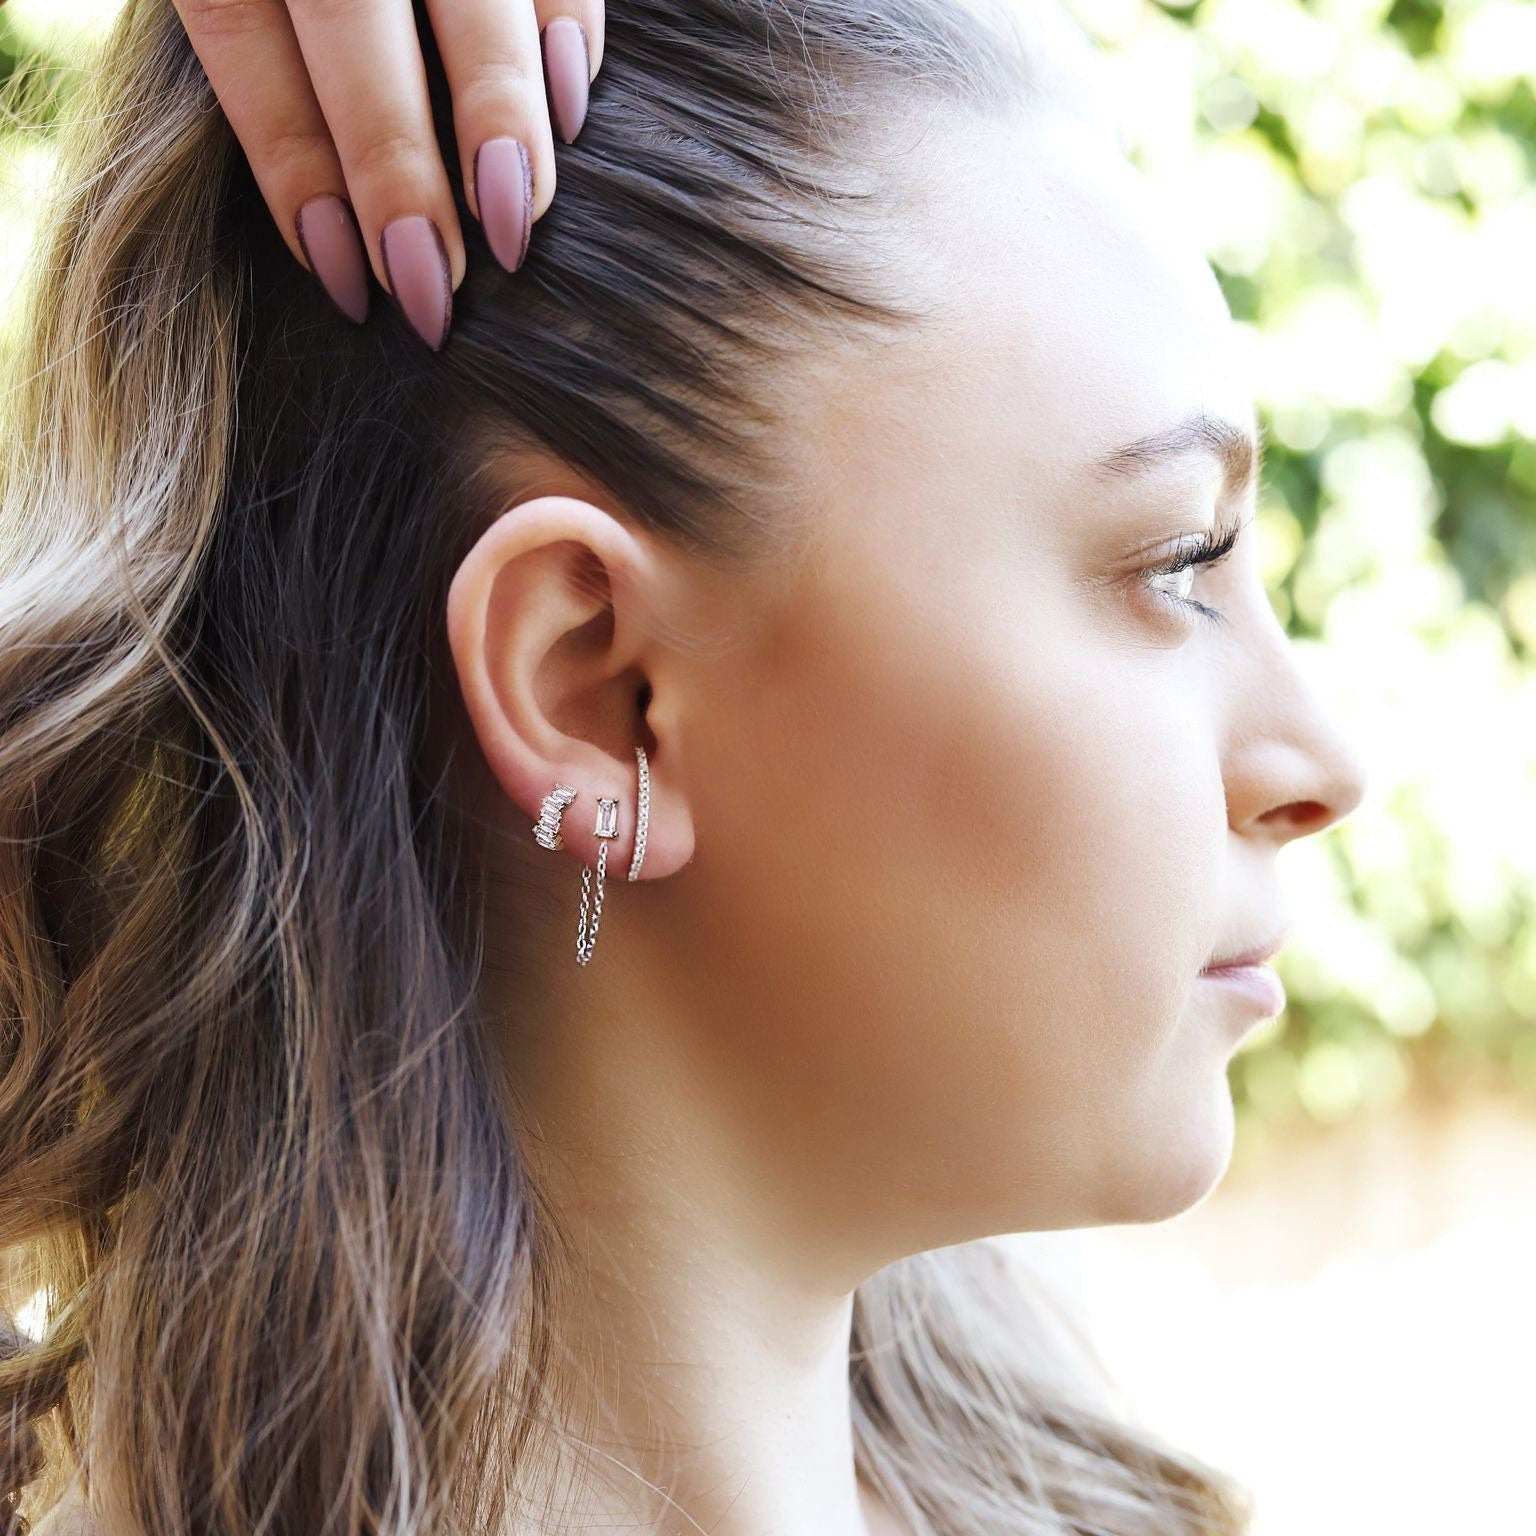 ALEXA-Minimalist Chain Earrings - Chain Loop Earrings - Silver Chain Earrings - Dainty Earrings -Stud Earrings  -  Bar Earrings - Tiny Earrings